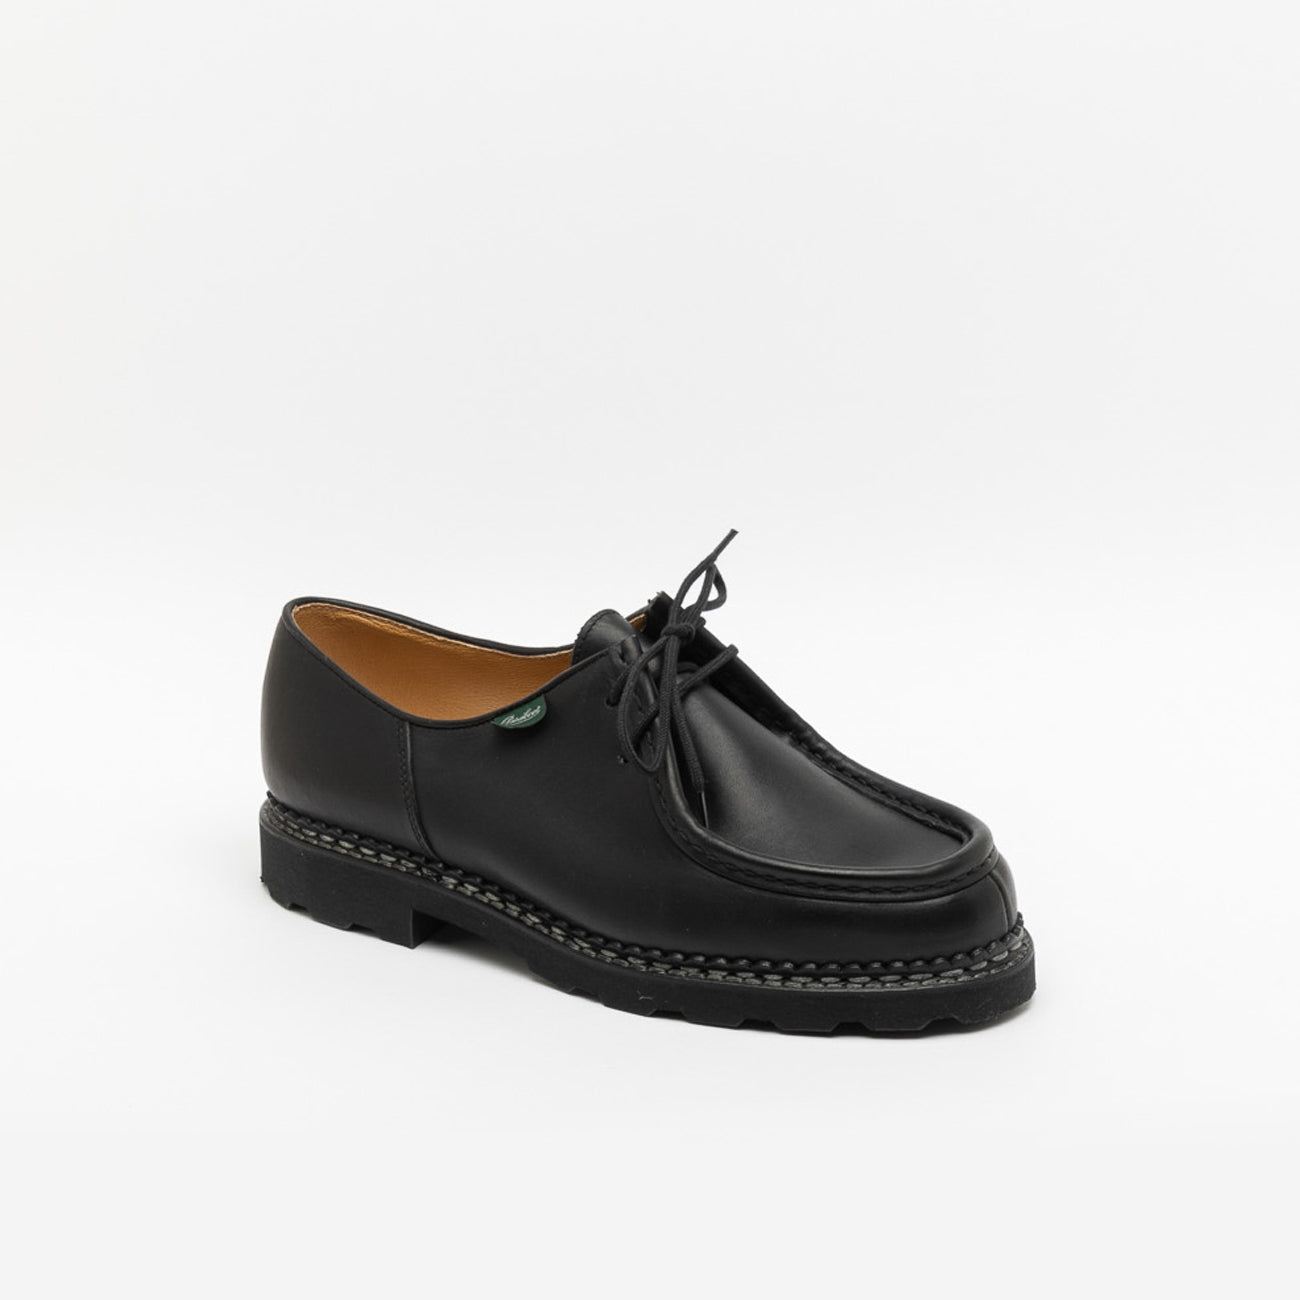 Paraboot black calf shoe